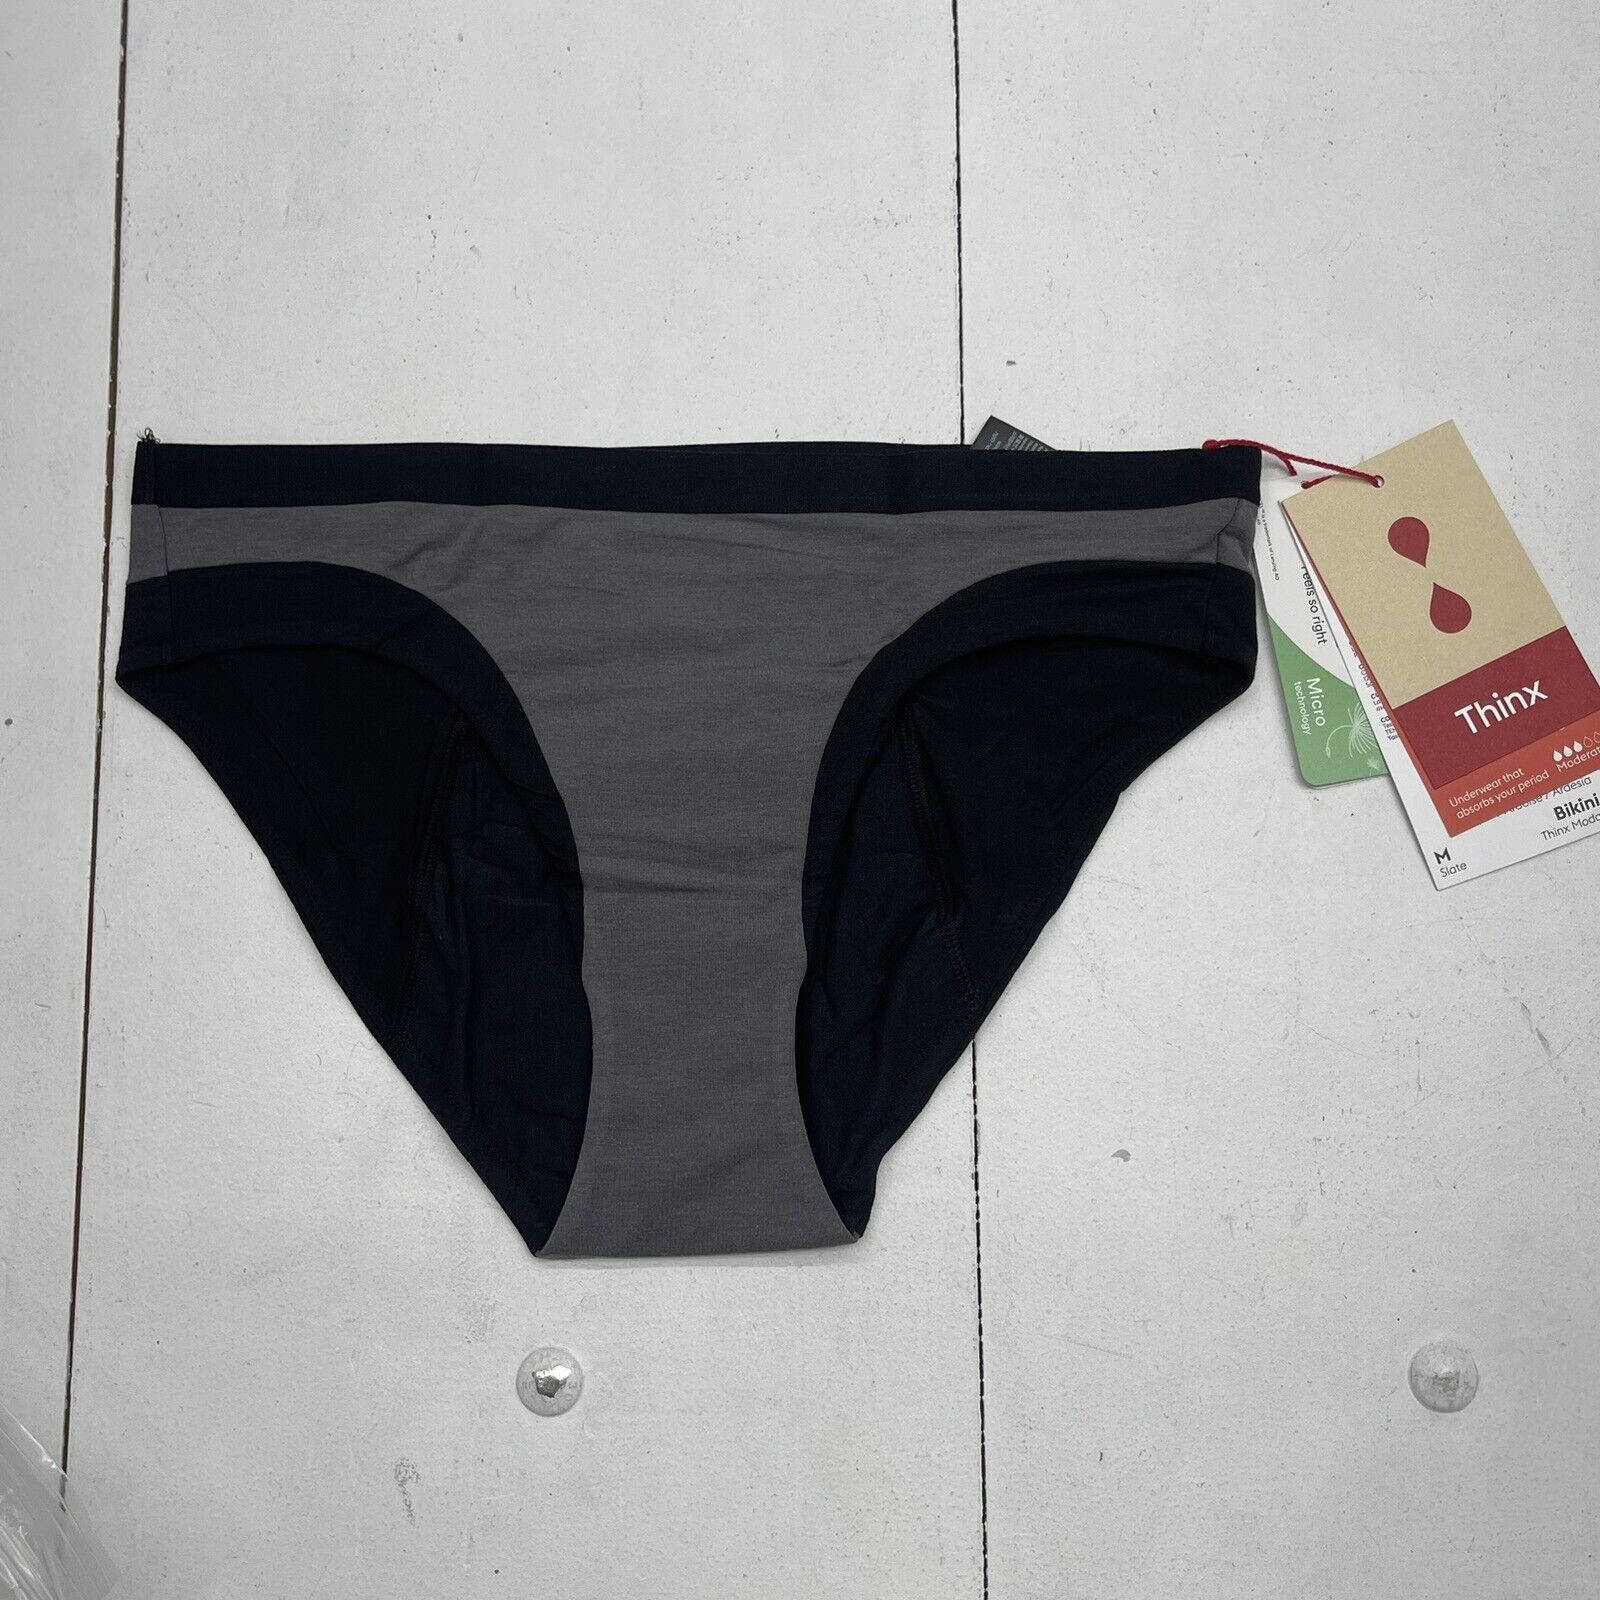 Thinx Slate Gray Period Panties Bikini Moderate Women's Size